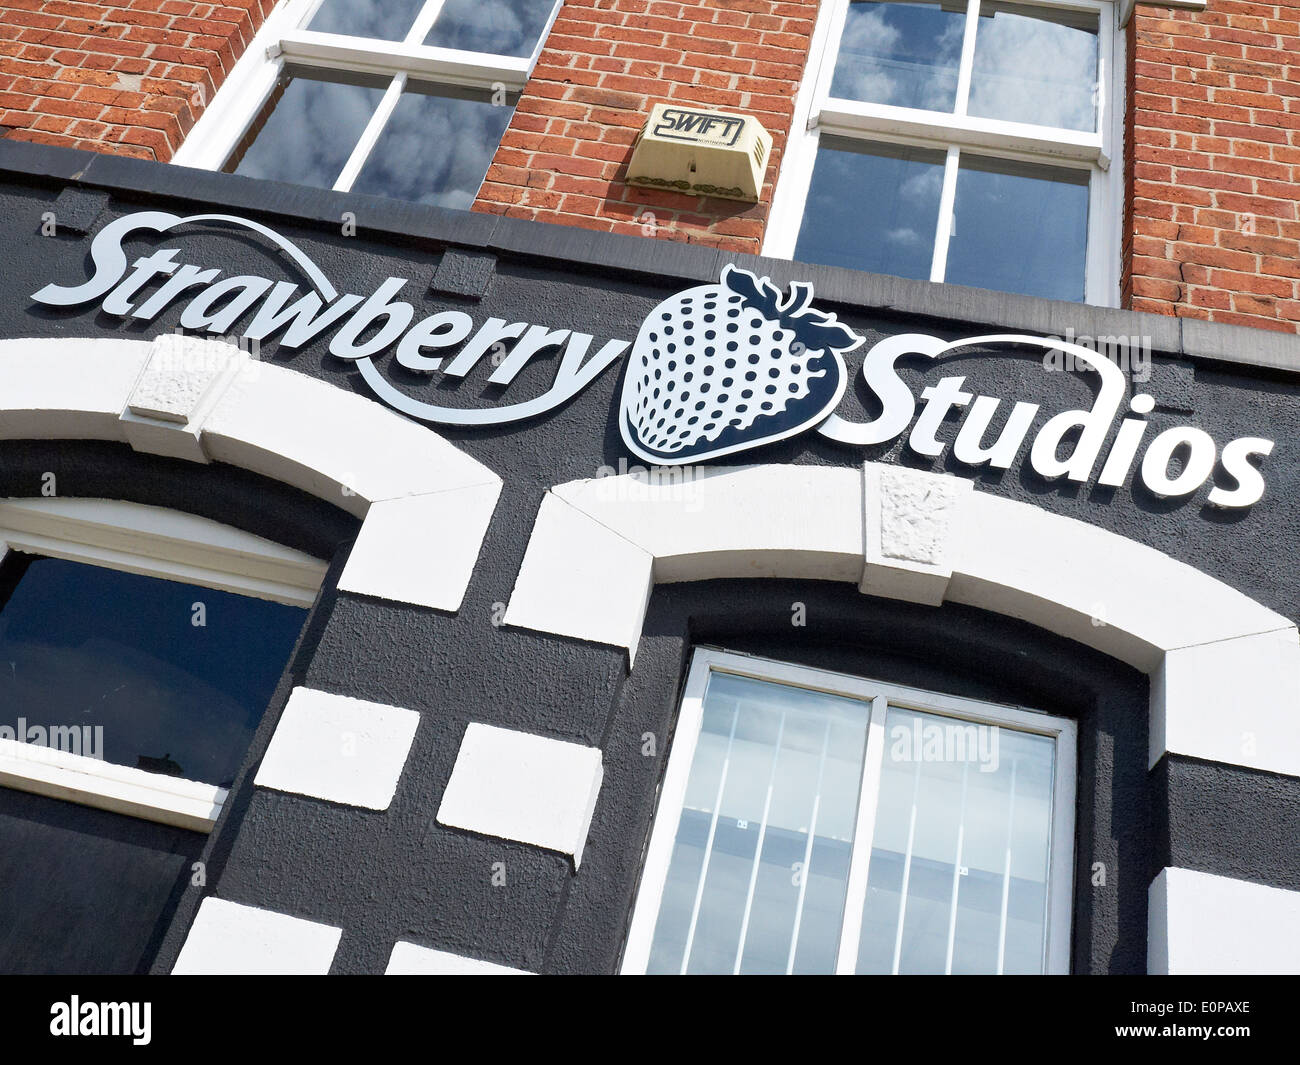 Strawberry Studios Former Home Of 10cc Recording Studio In Stockport Stock Photo Alamy